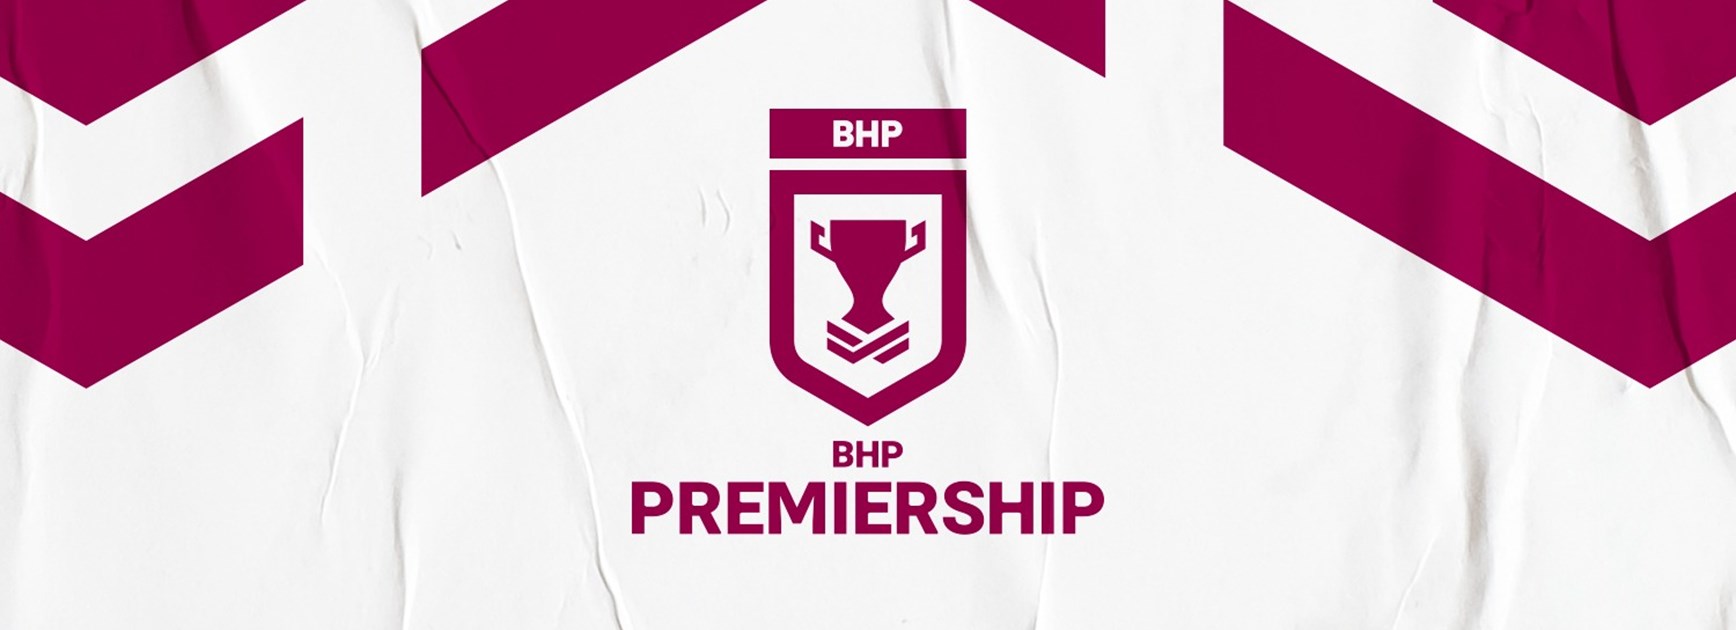 QRL confirms BHP Premiership team change